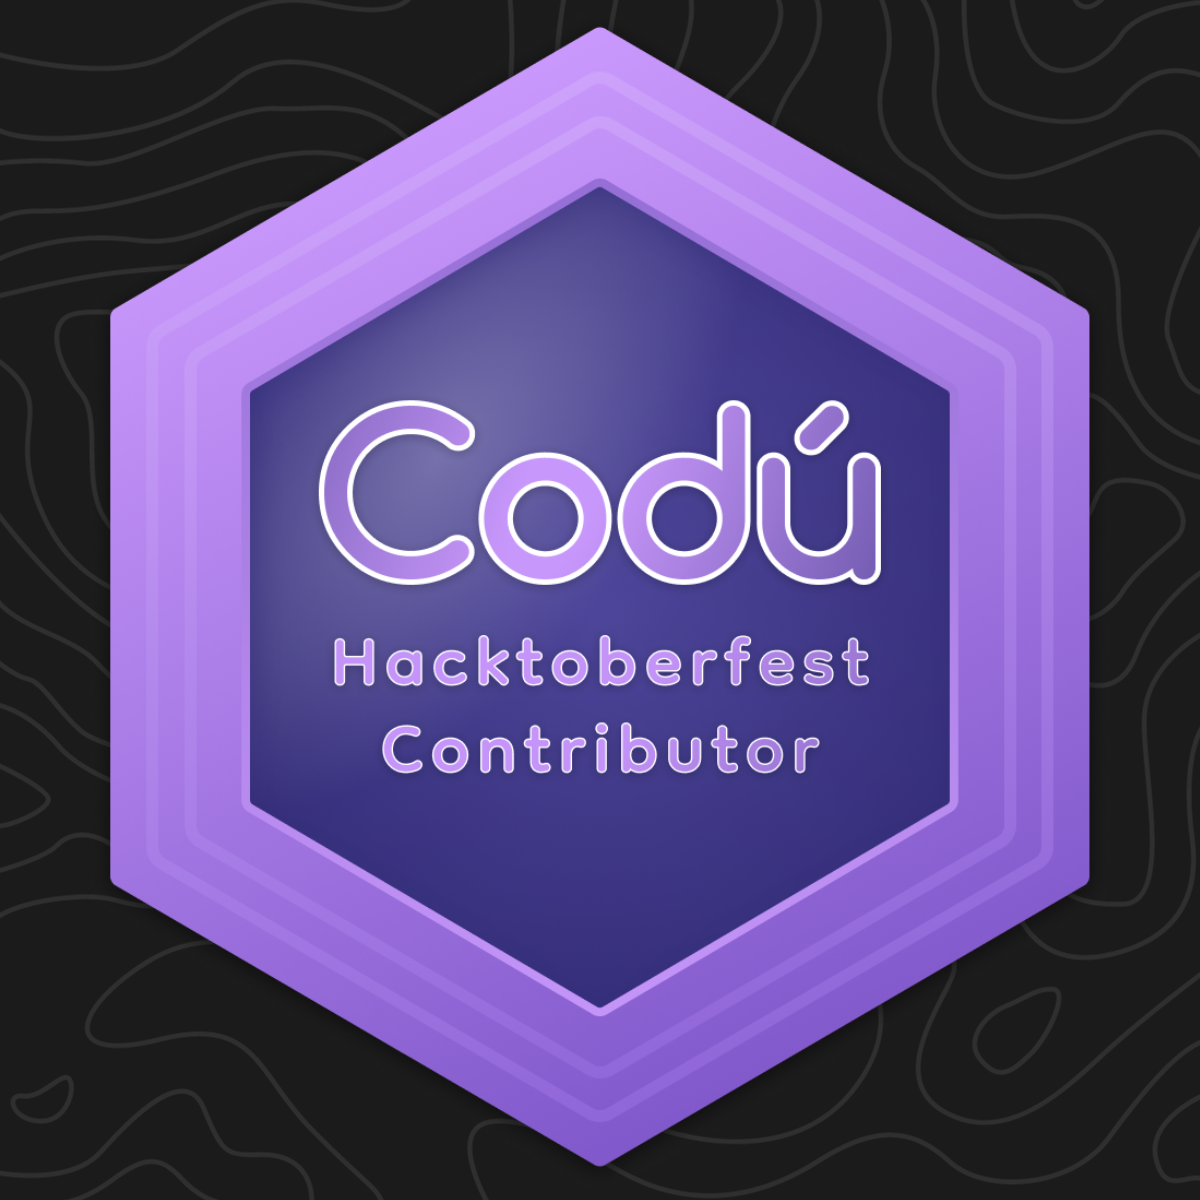 A purple badge for Hacktoberfest contributors